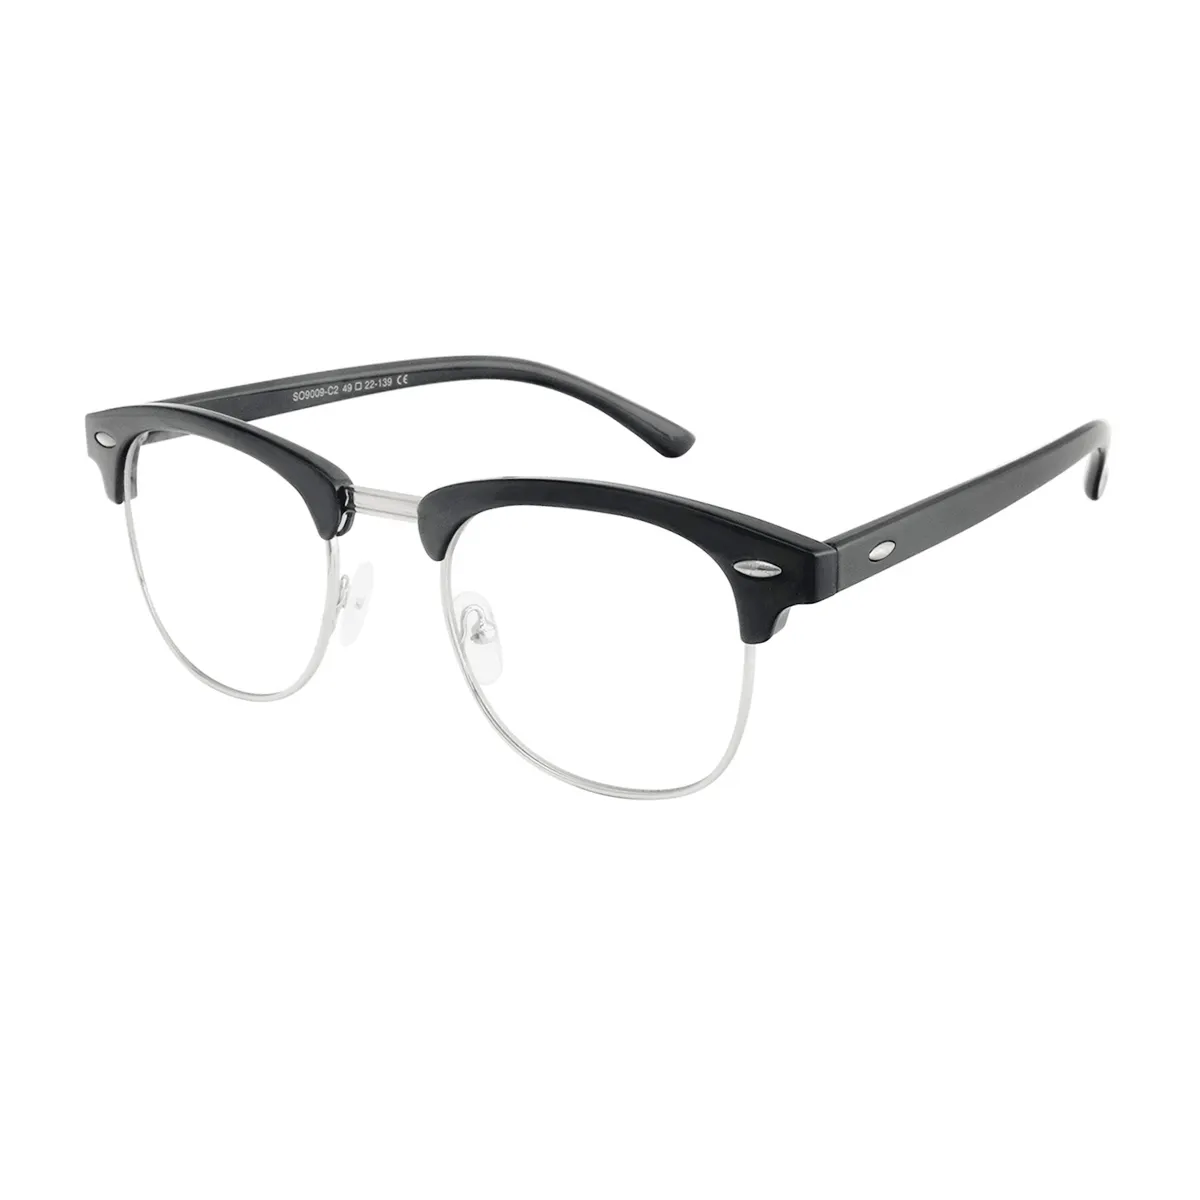 Floyd - Browline Black Glasses for Men & Women - EFE